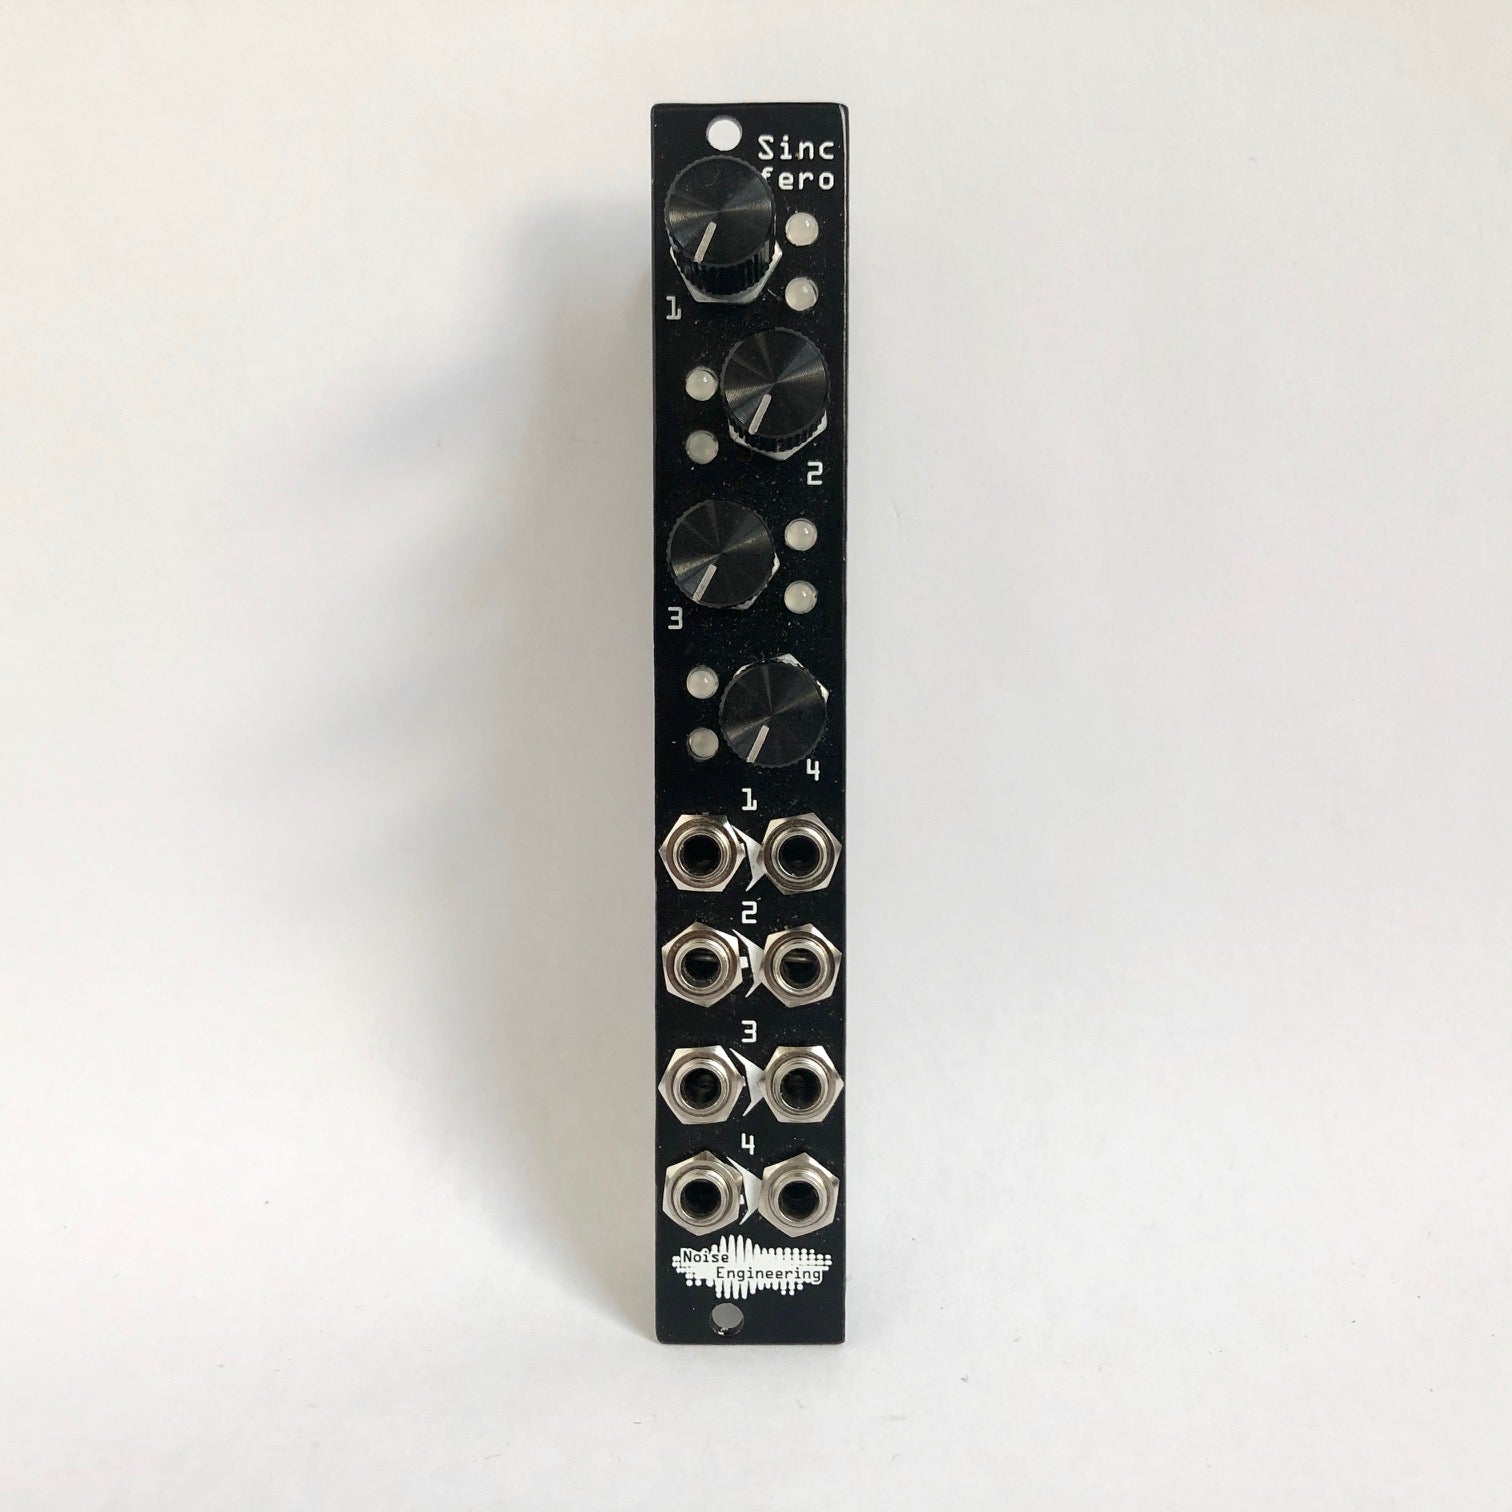 Noise Engineering Sinc Defero (black panel)